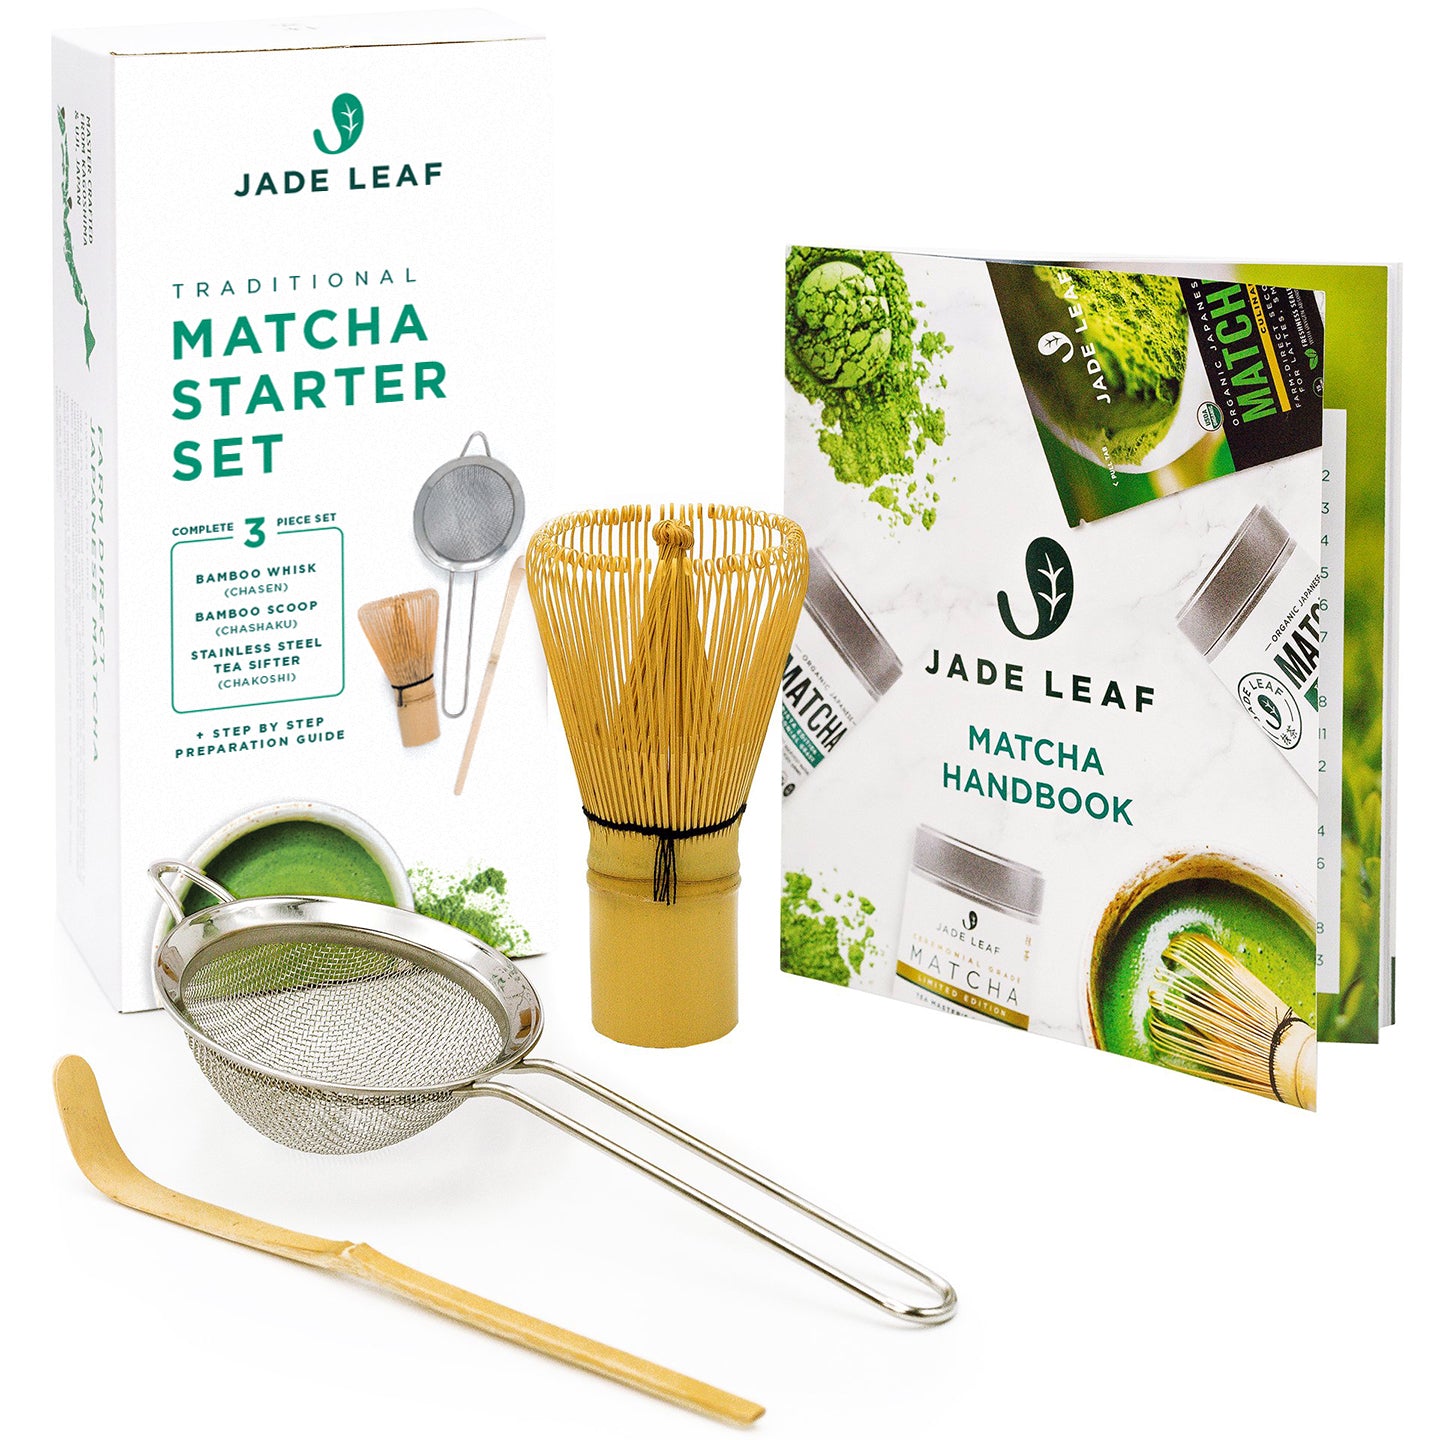 The Complete Matcha Starter Kit